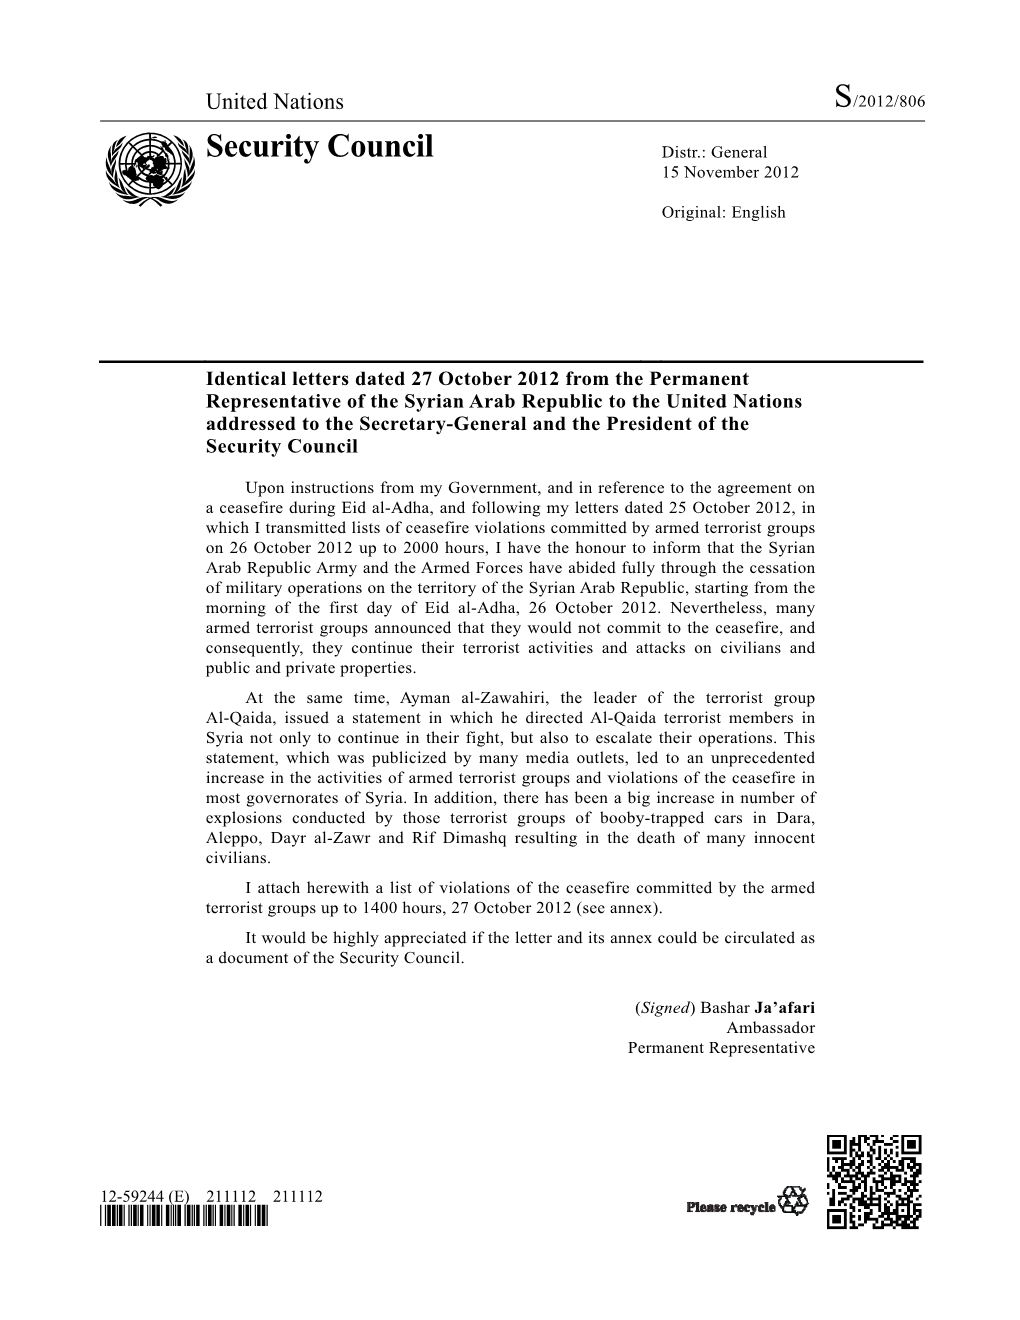 Security Council Distr.: General 15 November 2012